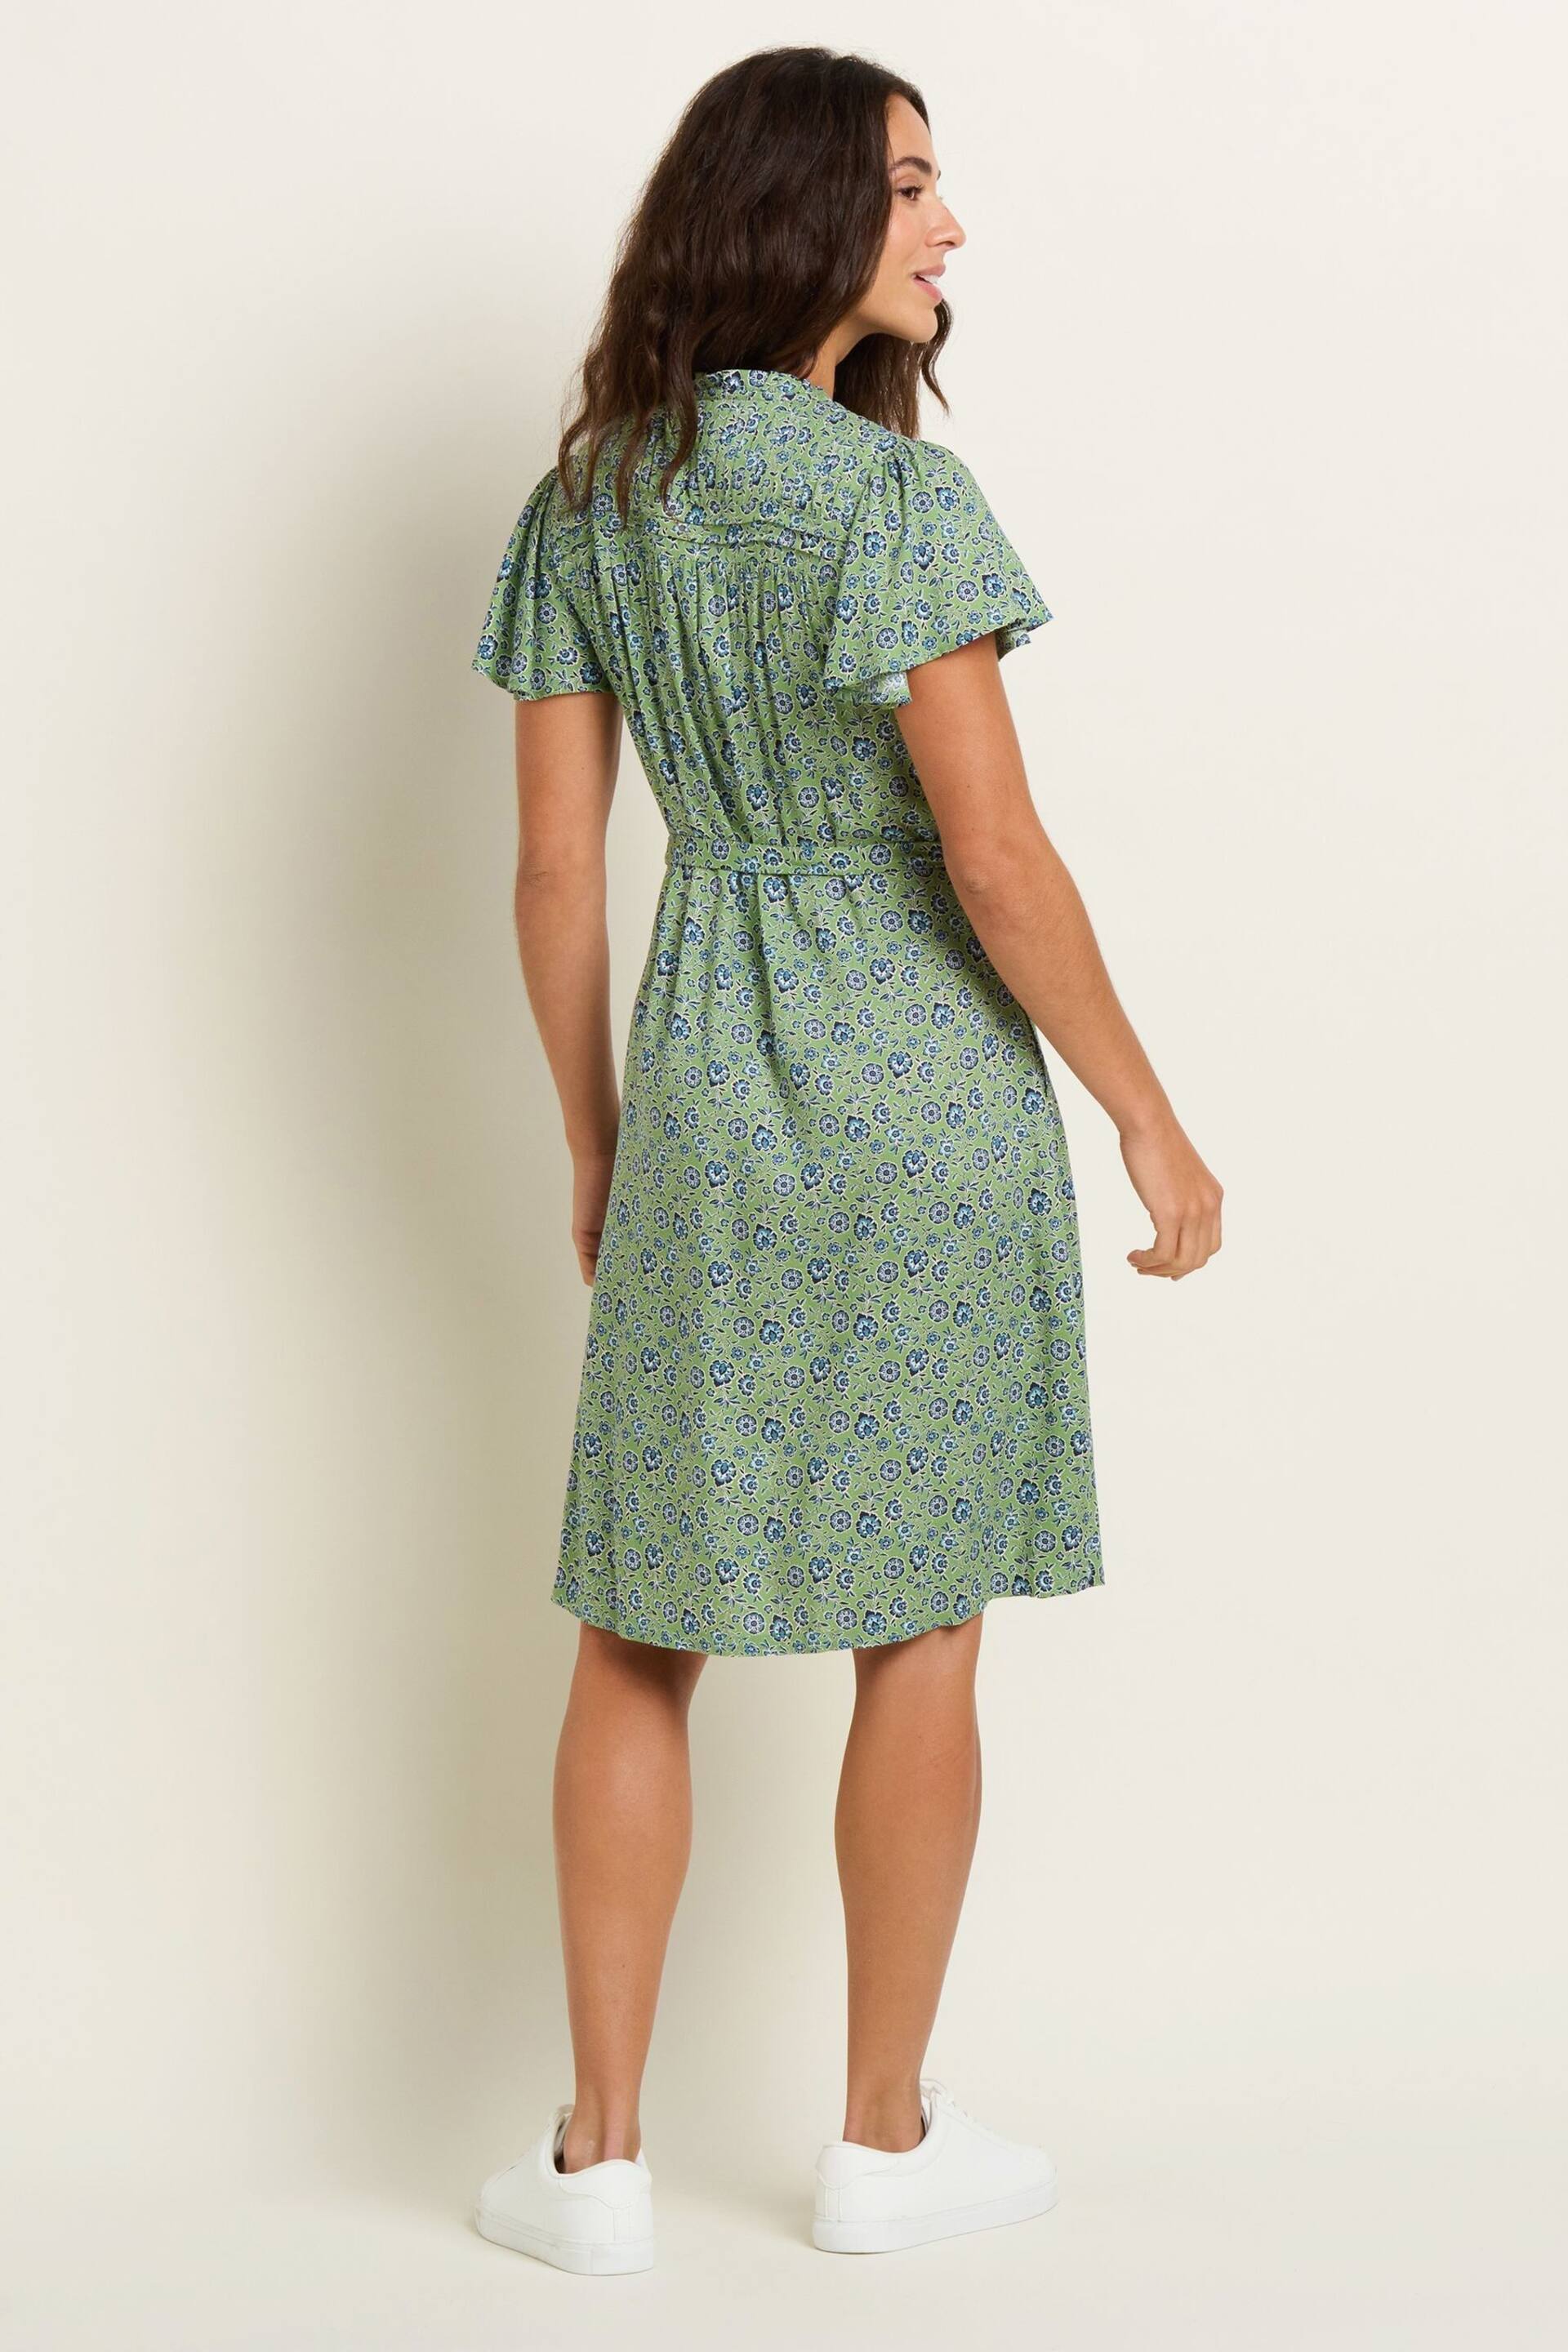 Brakeburn Green Elsie Dress - Image 3 of 6